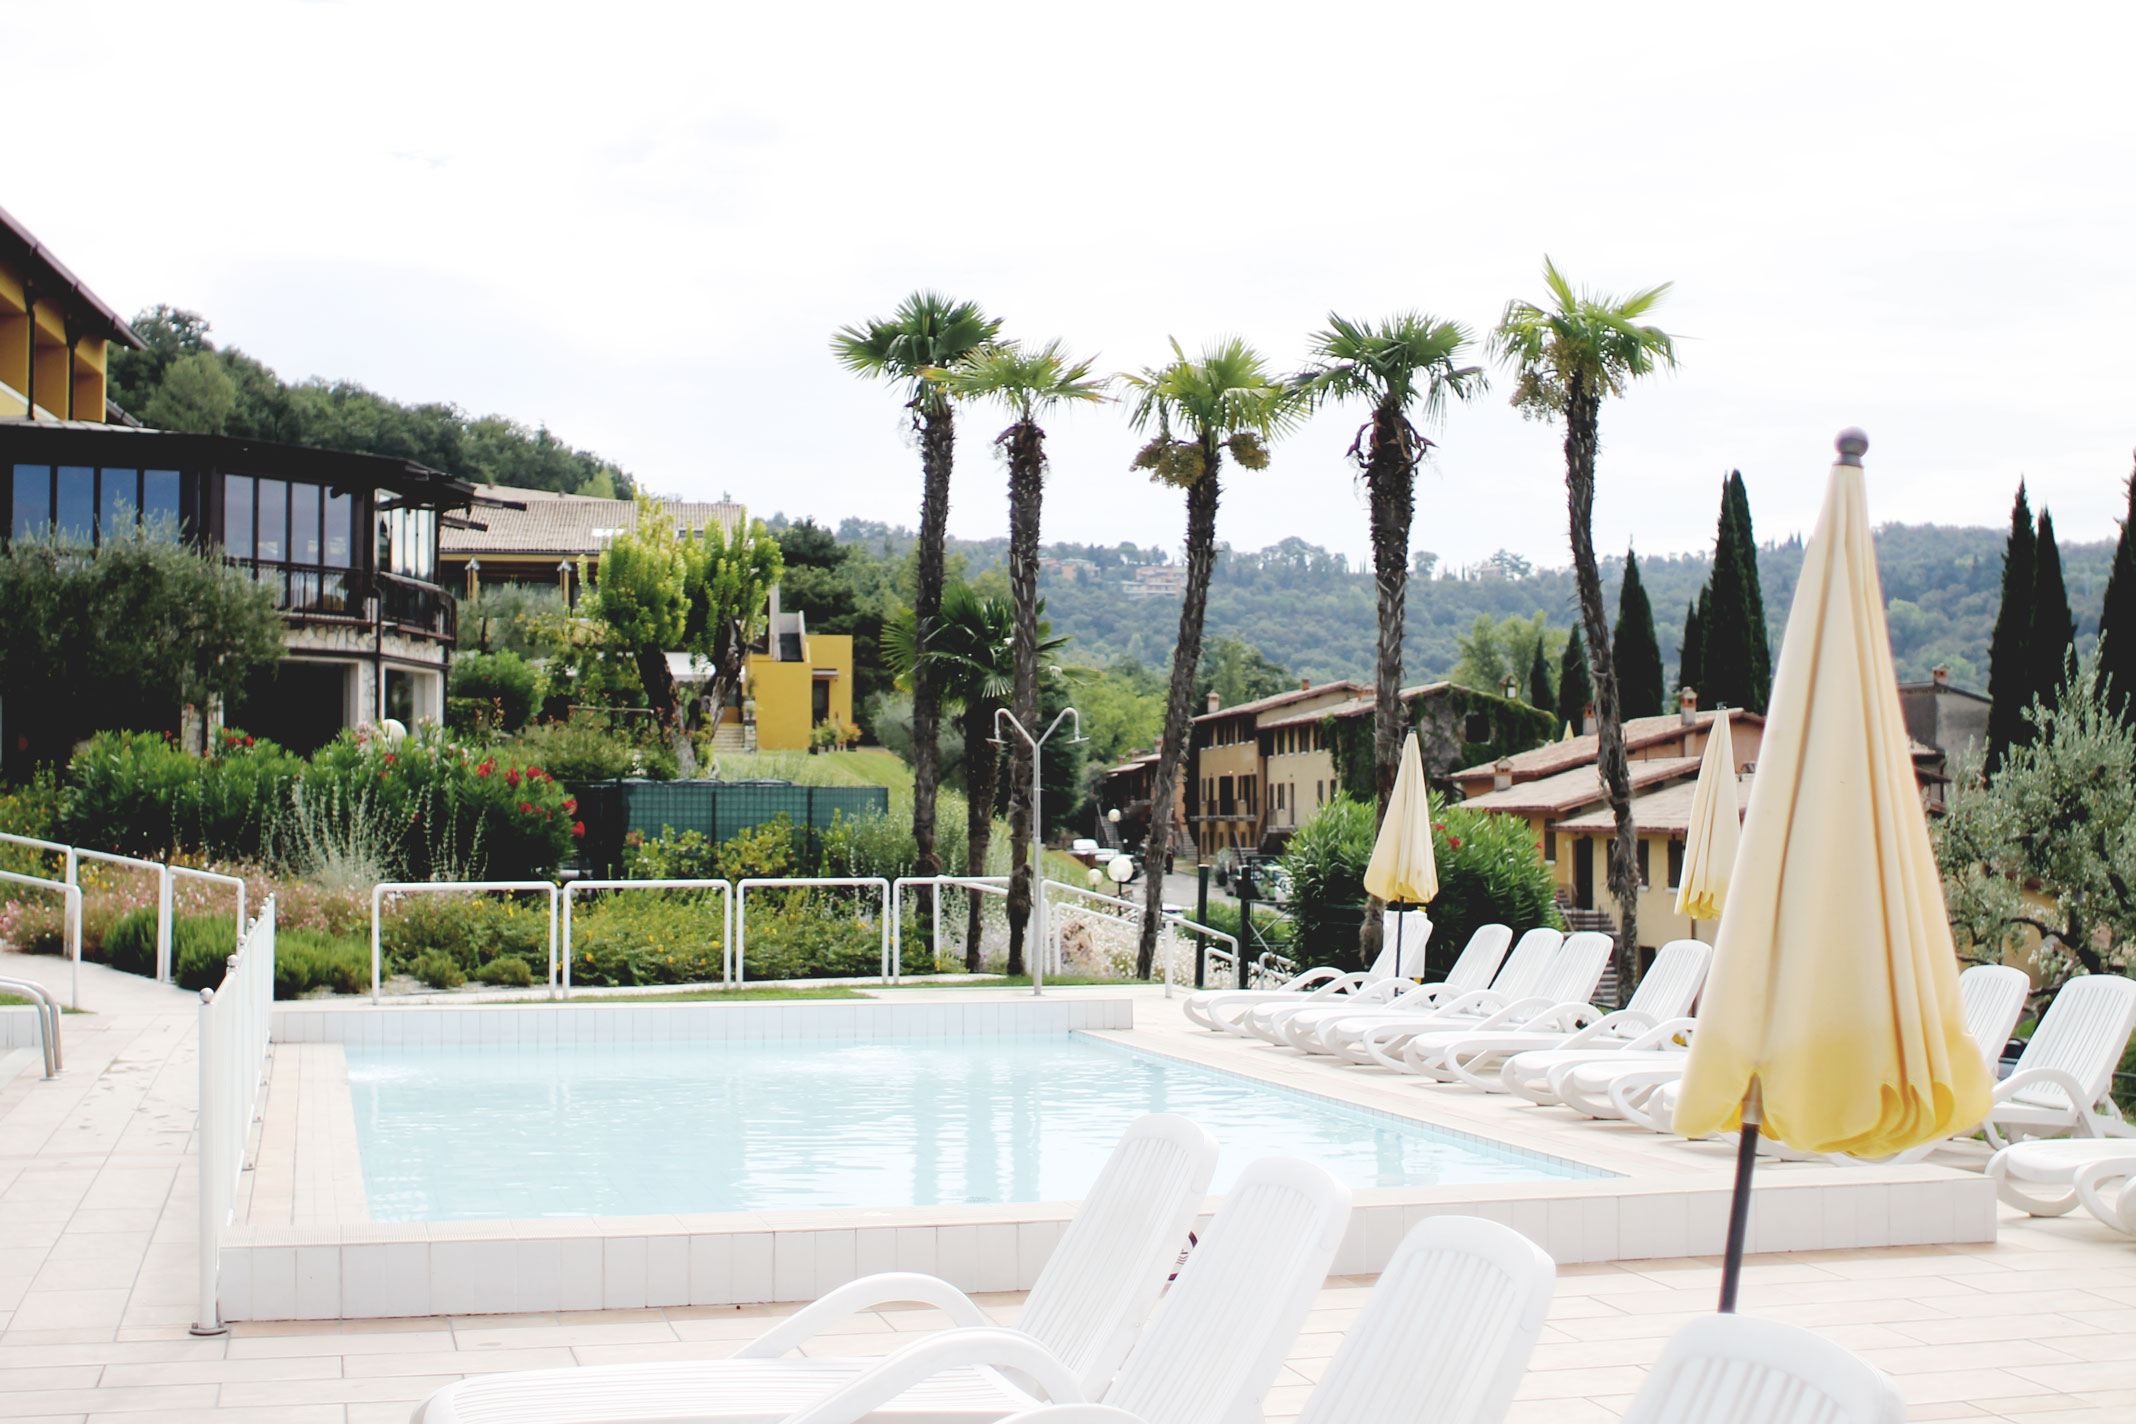 Styleat30 Travel Blog - Poiano Resort Hotel Review - Lake Garda Holiday - Italy Travel Guide 36